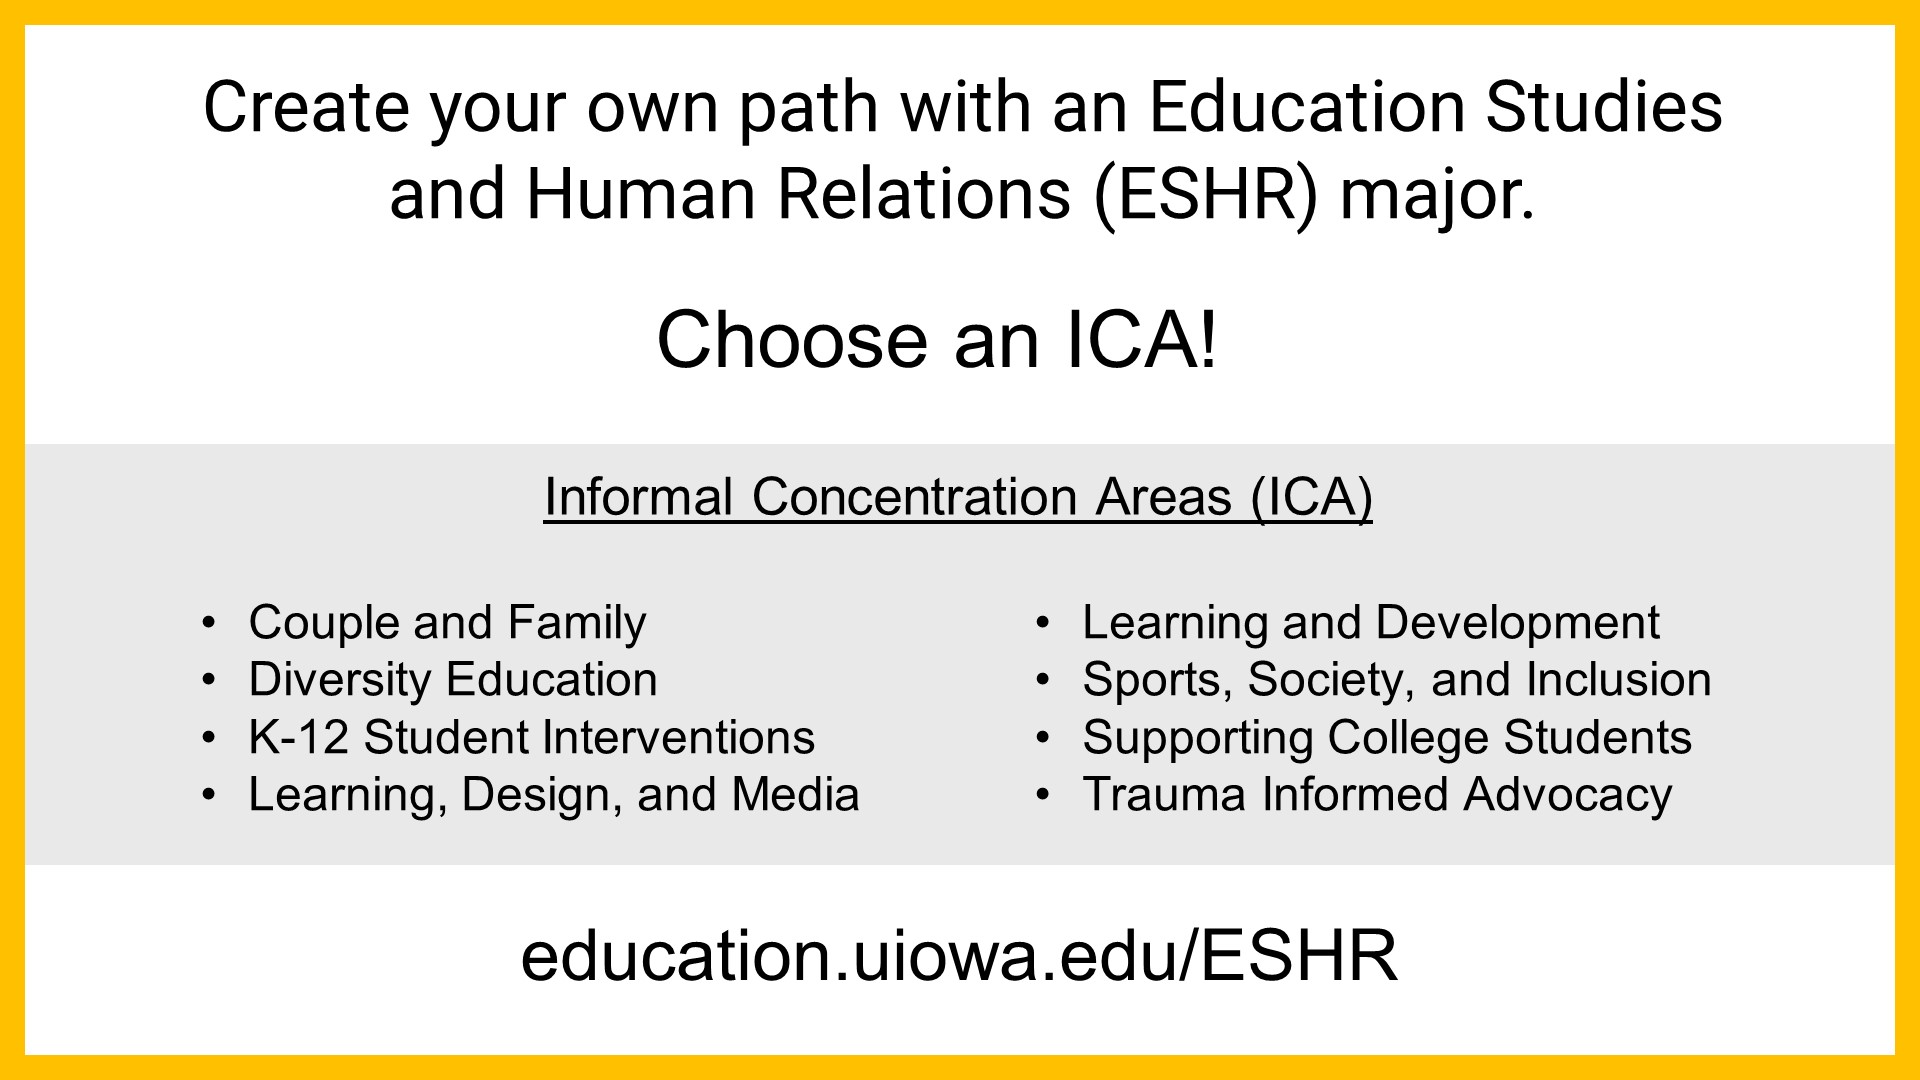 Create your own path with an Education Studies and Human Relations (ESHR) major. Choose an ICA. education.uiowa.edu/ESHR